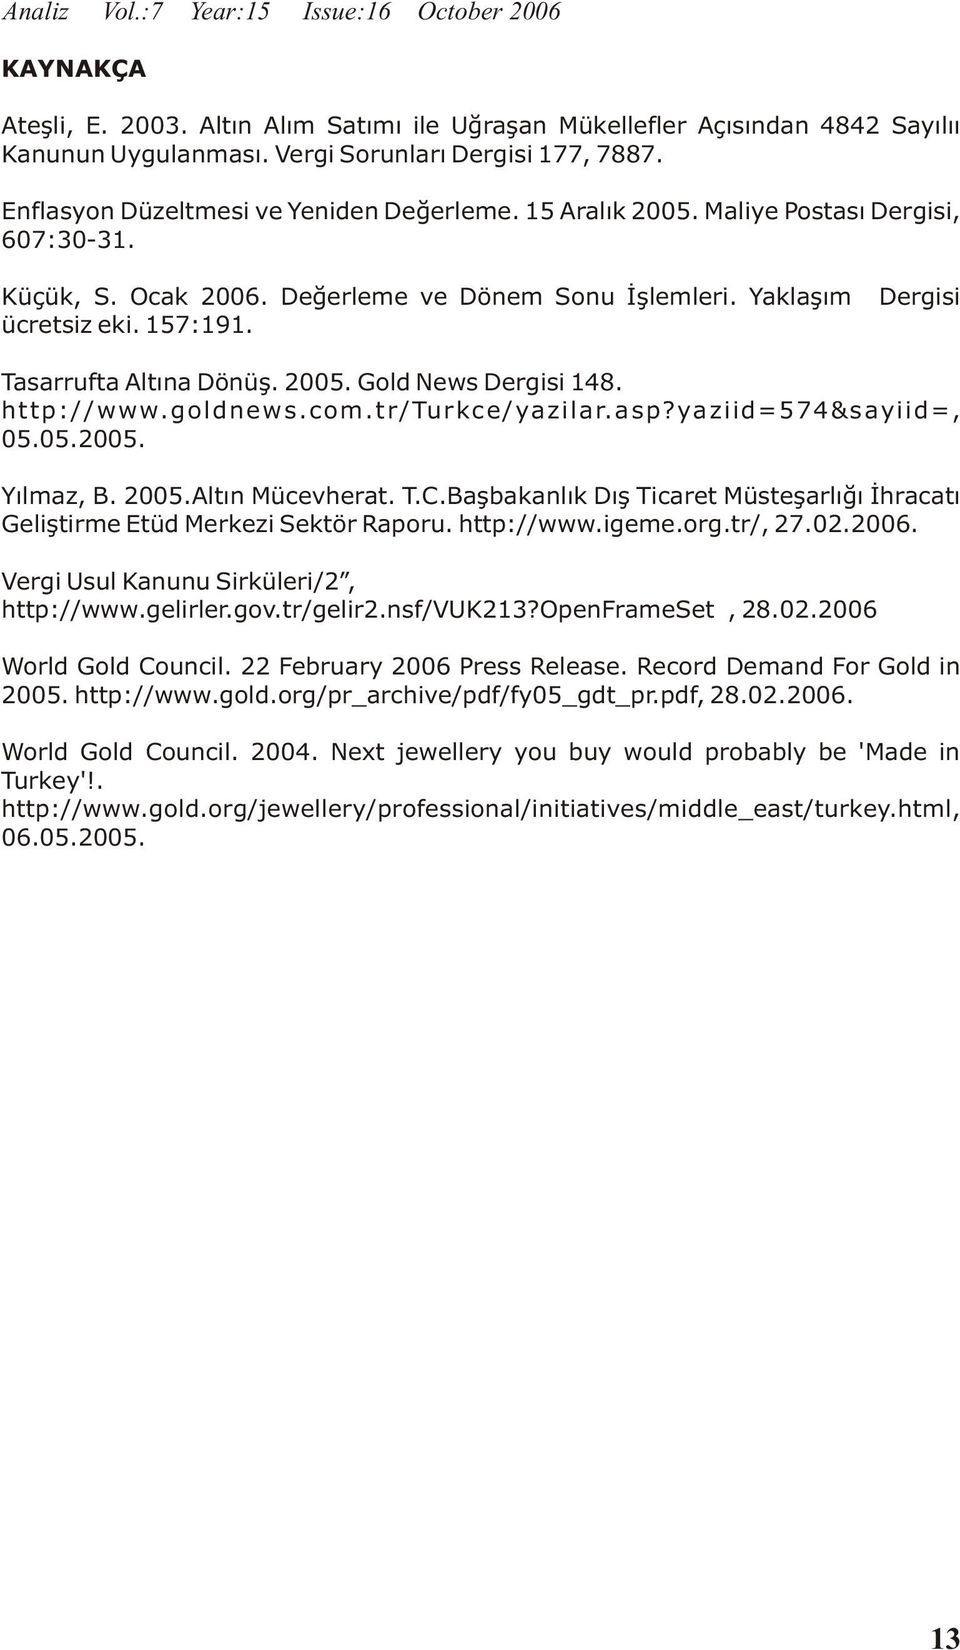 Tasarrufta Altýna Dönüþ. 2005. Gold News Dergisi 148. http://www.goldnews.com.tr/turkce/yazilar.asp?yaziid=574&sayiid=, 05.05.2005. Yýlmaz, B. 2005.Altýn Mücevherat. T.C.